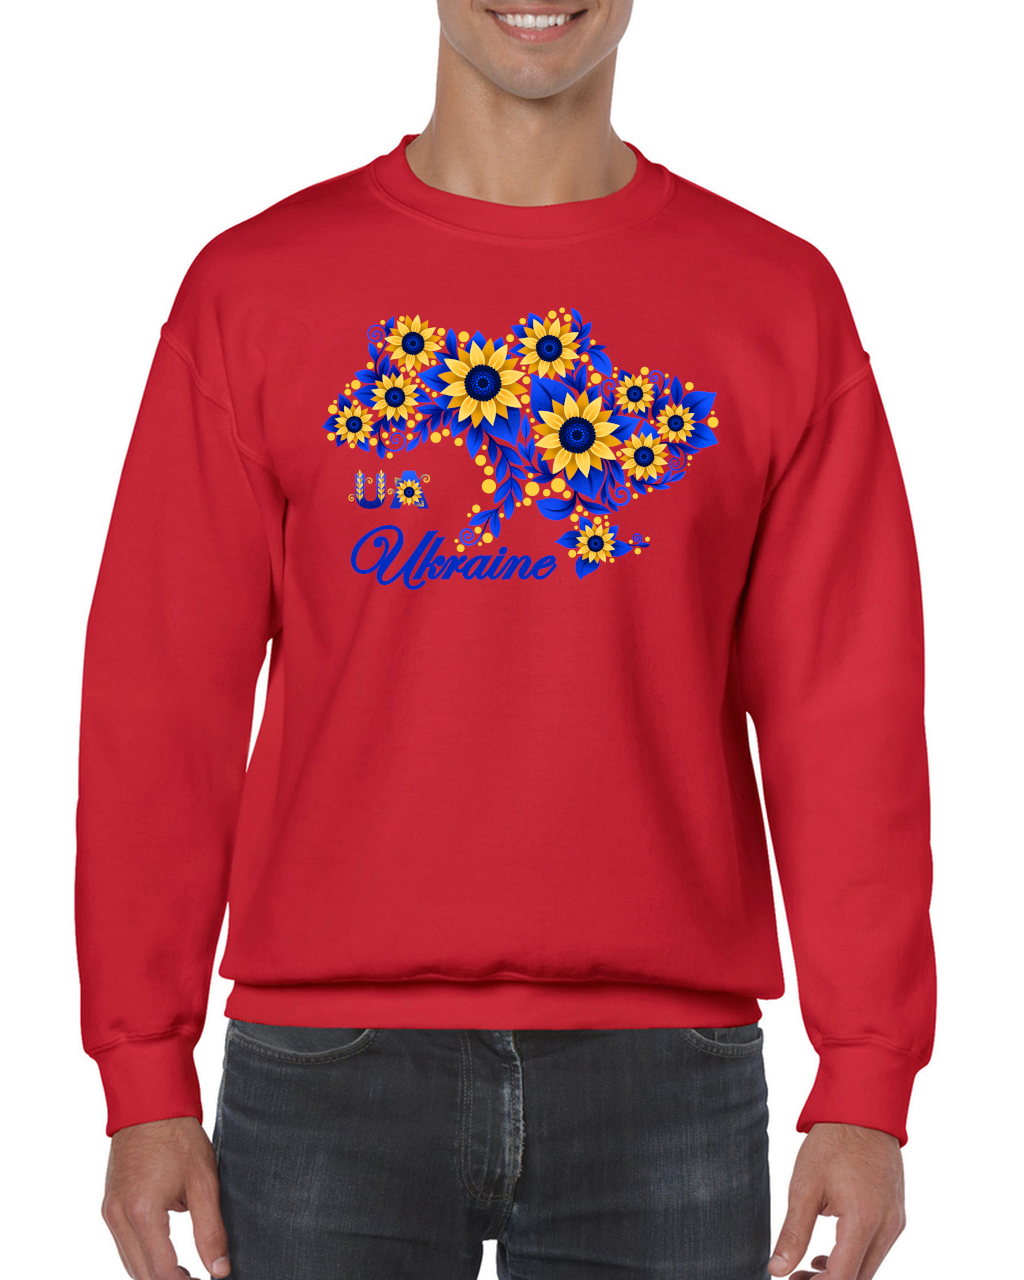 Adult unisex sweatshirt "Sunflower Ukraine"